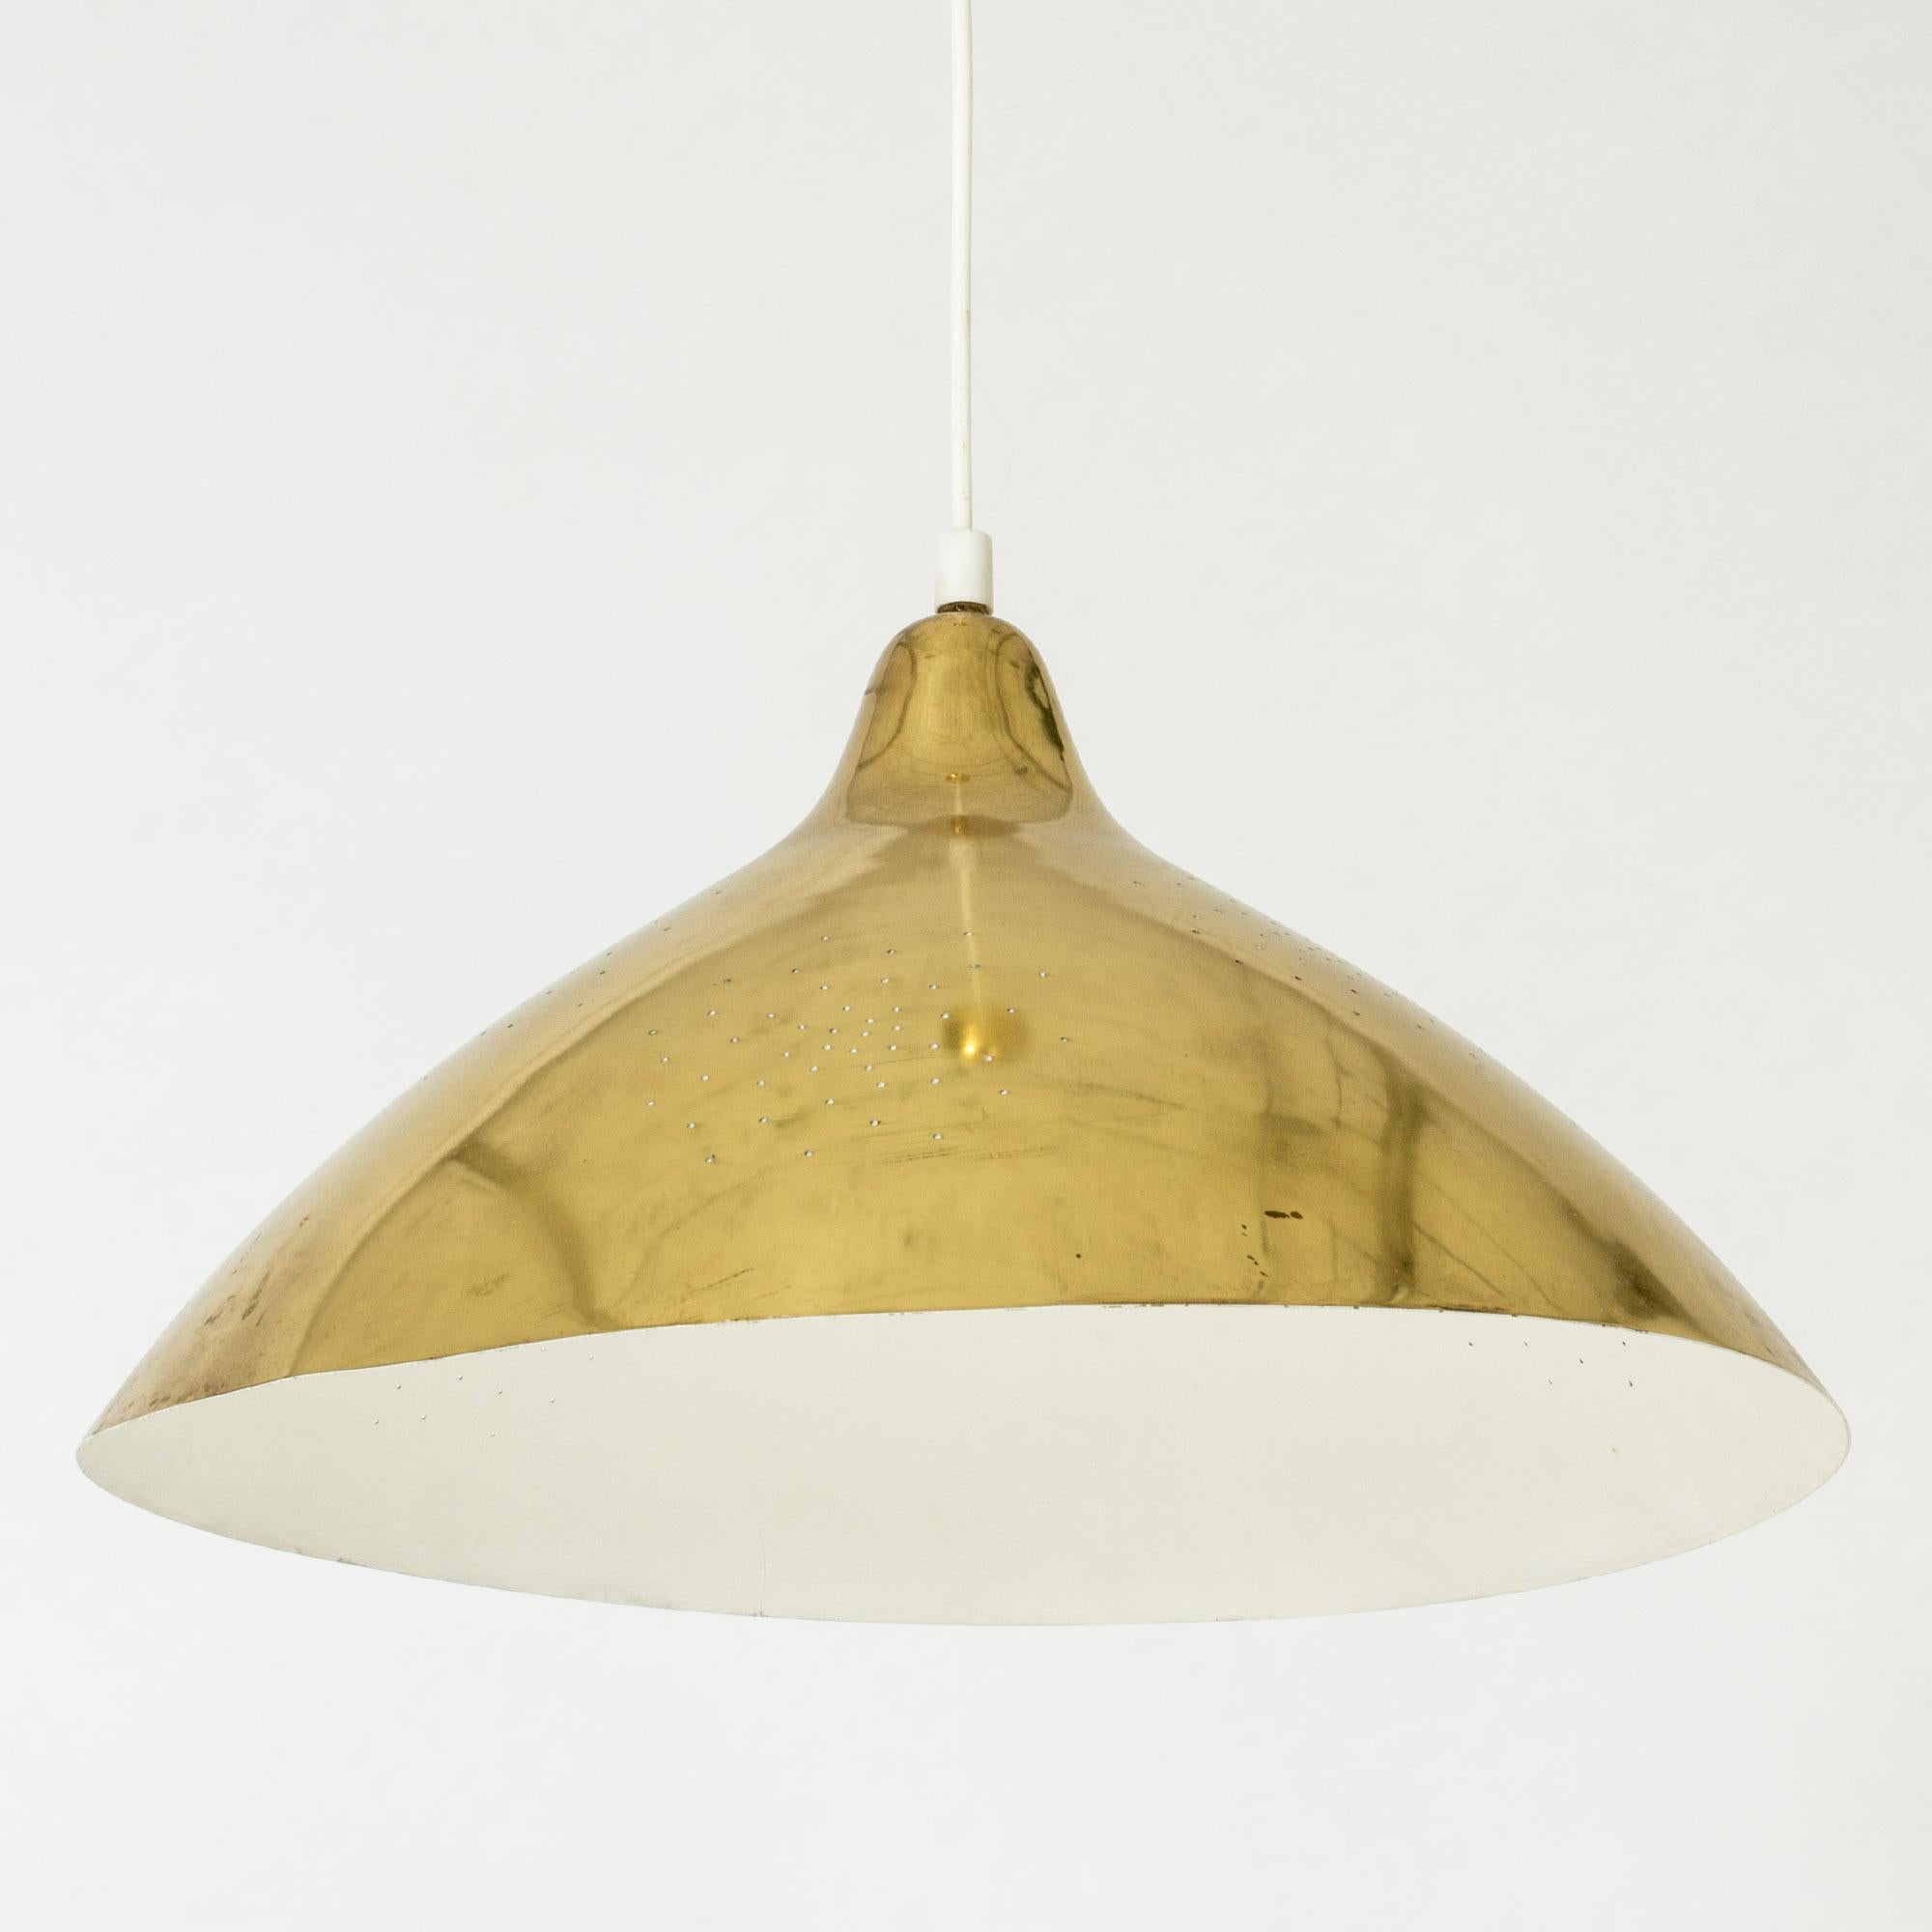 Scandinavian Modern Midcentury Brass Pendant Lamp by Lisa Johansson-Pape, Orno, Finland, 1950s For Sale